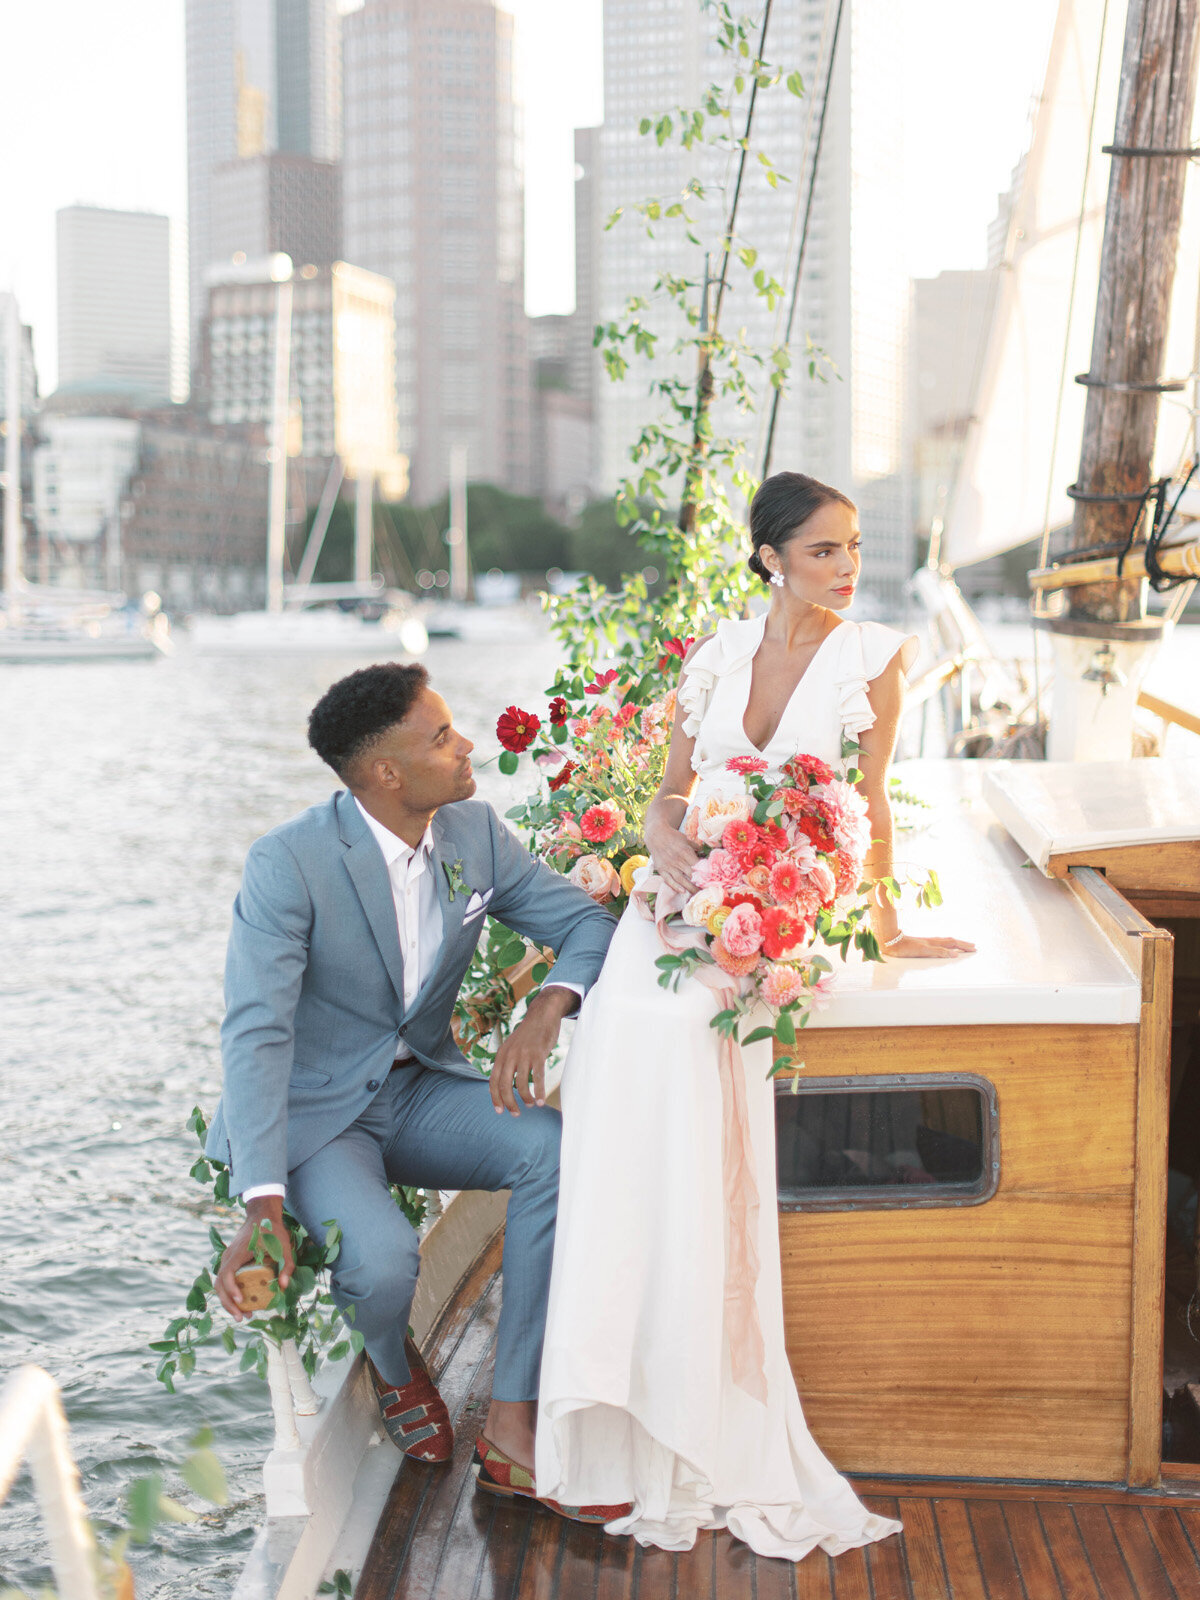 Kate-Murtaugh-Events-elopement-wedding-planner-Boston-Harbor-sailing-sail-boat-yacht-greenery-water-skyline-couple-bouquet-schooner